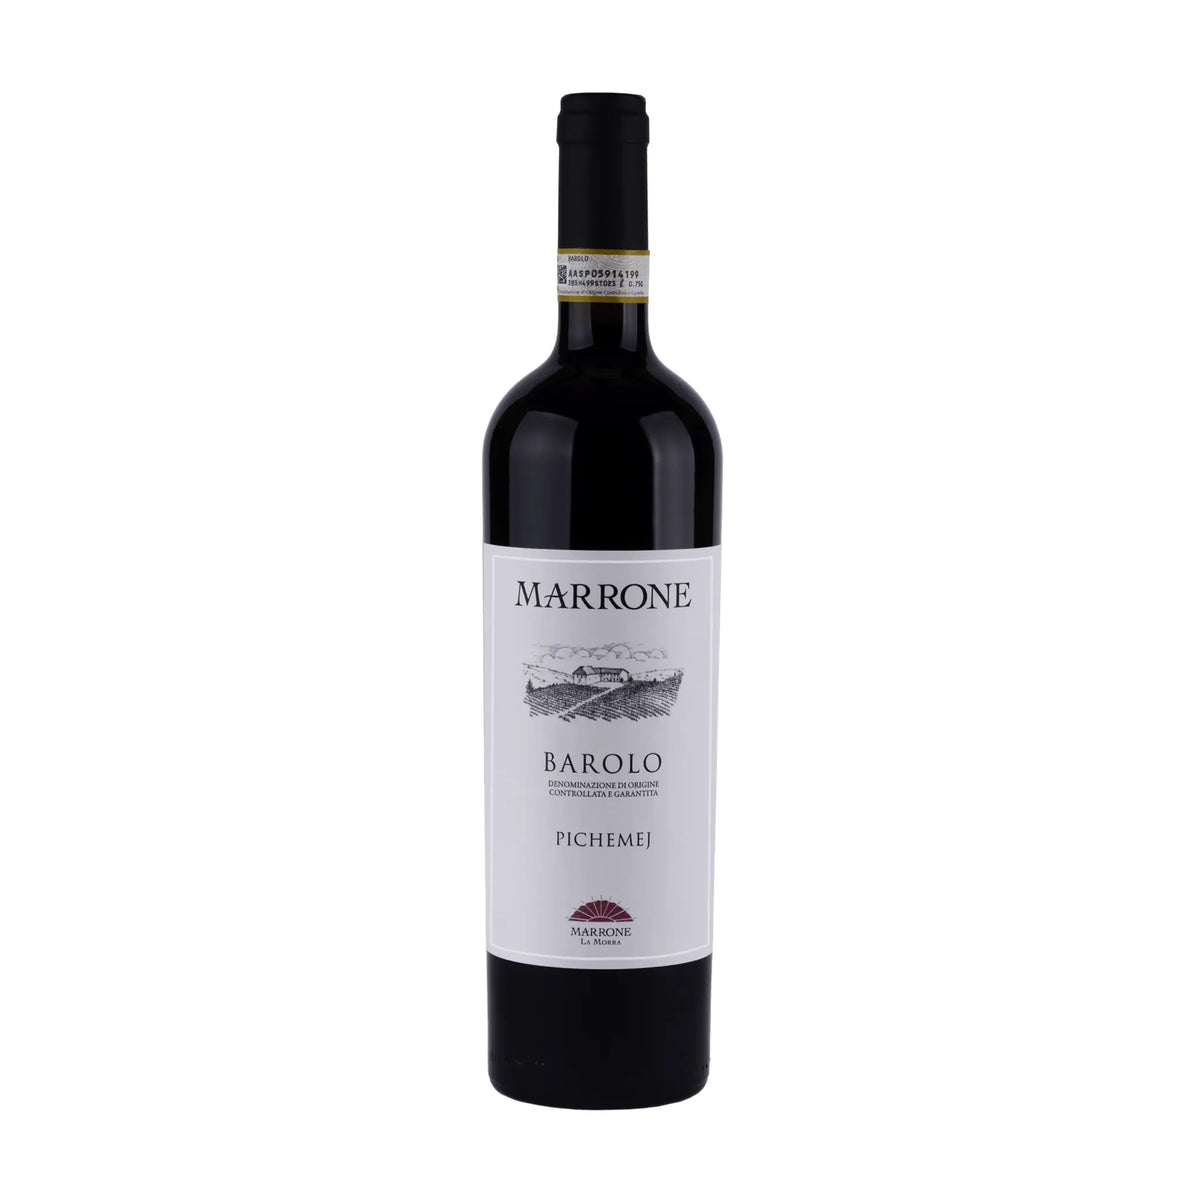 Marrone-Rotwein-Nebbiolo-Piemont-Italien-Barolo DOCG Pichemej Magnum HOKI-WINECOM